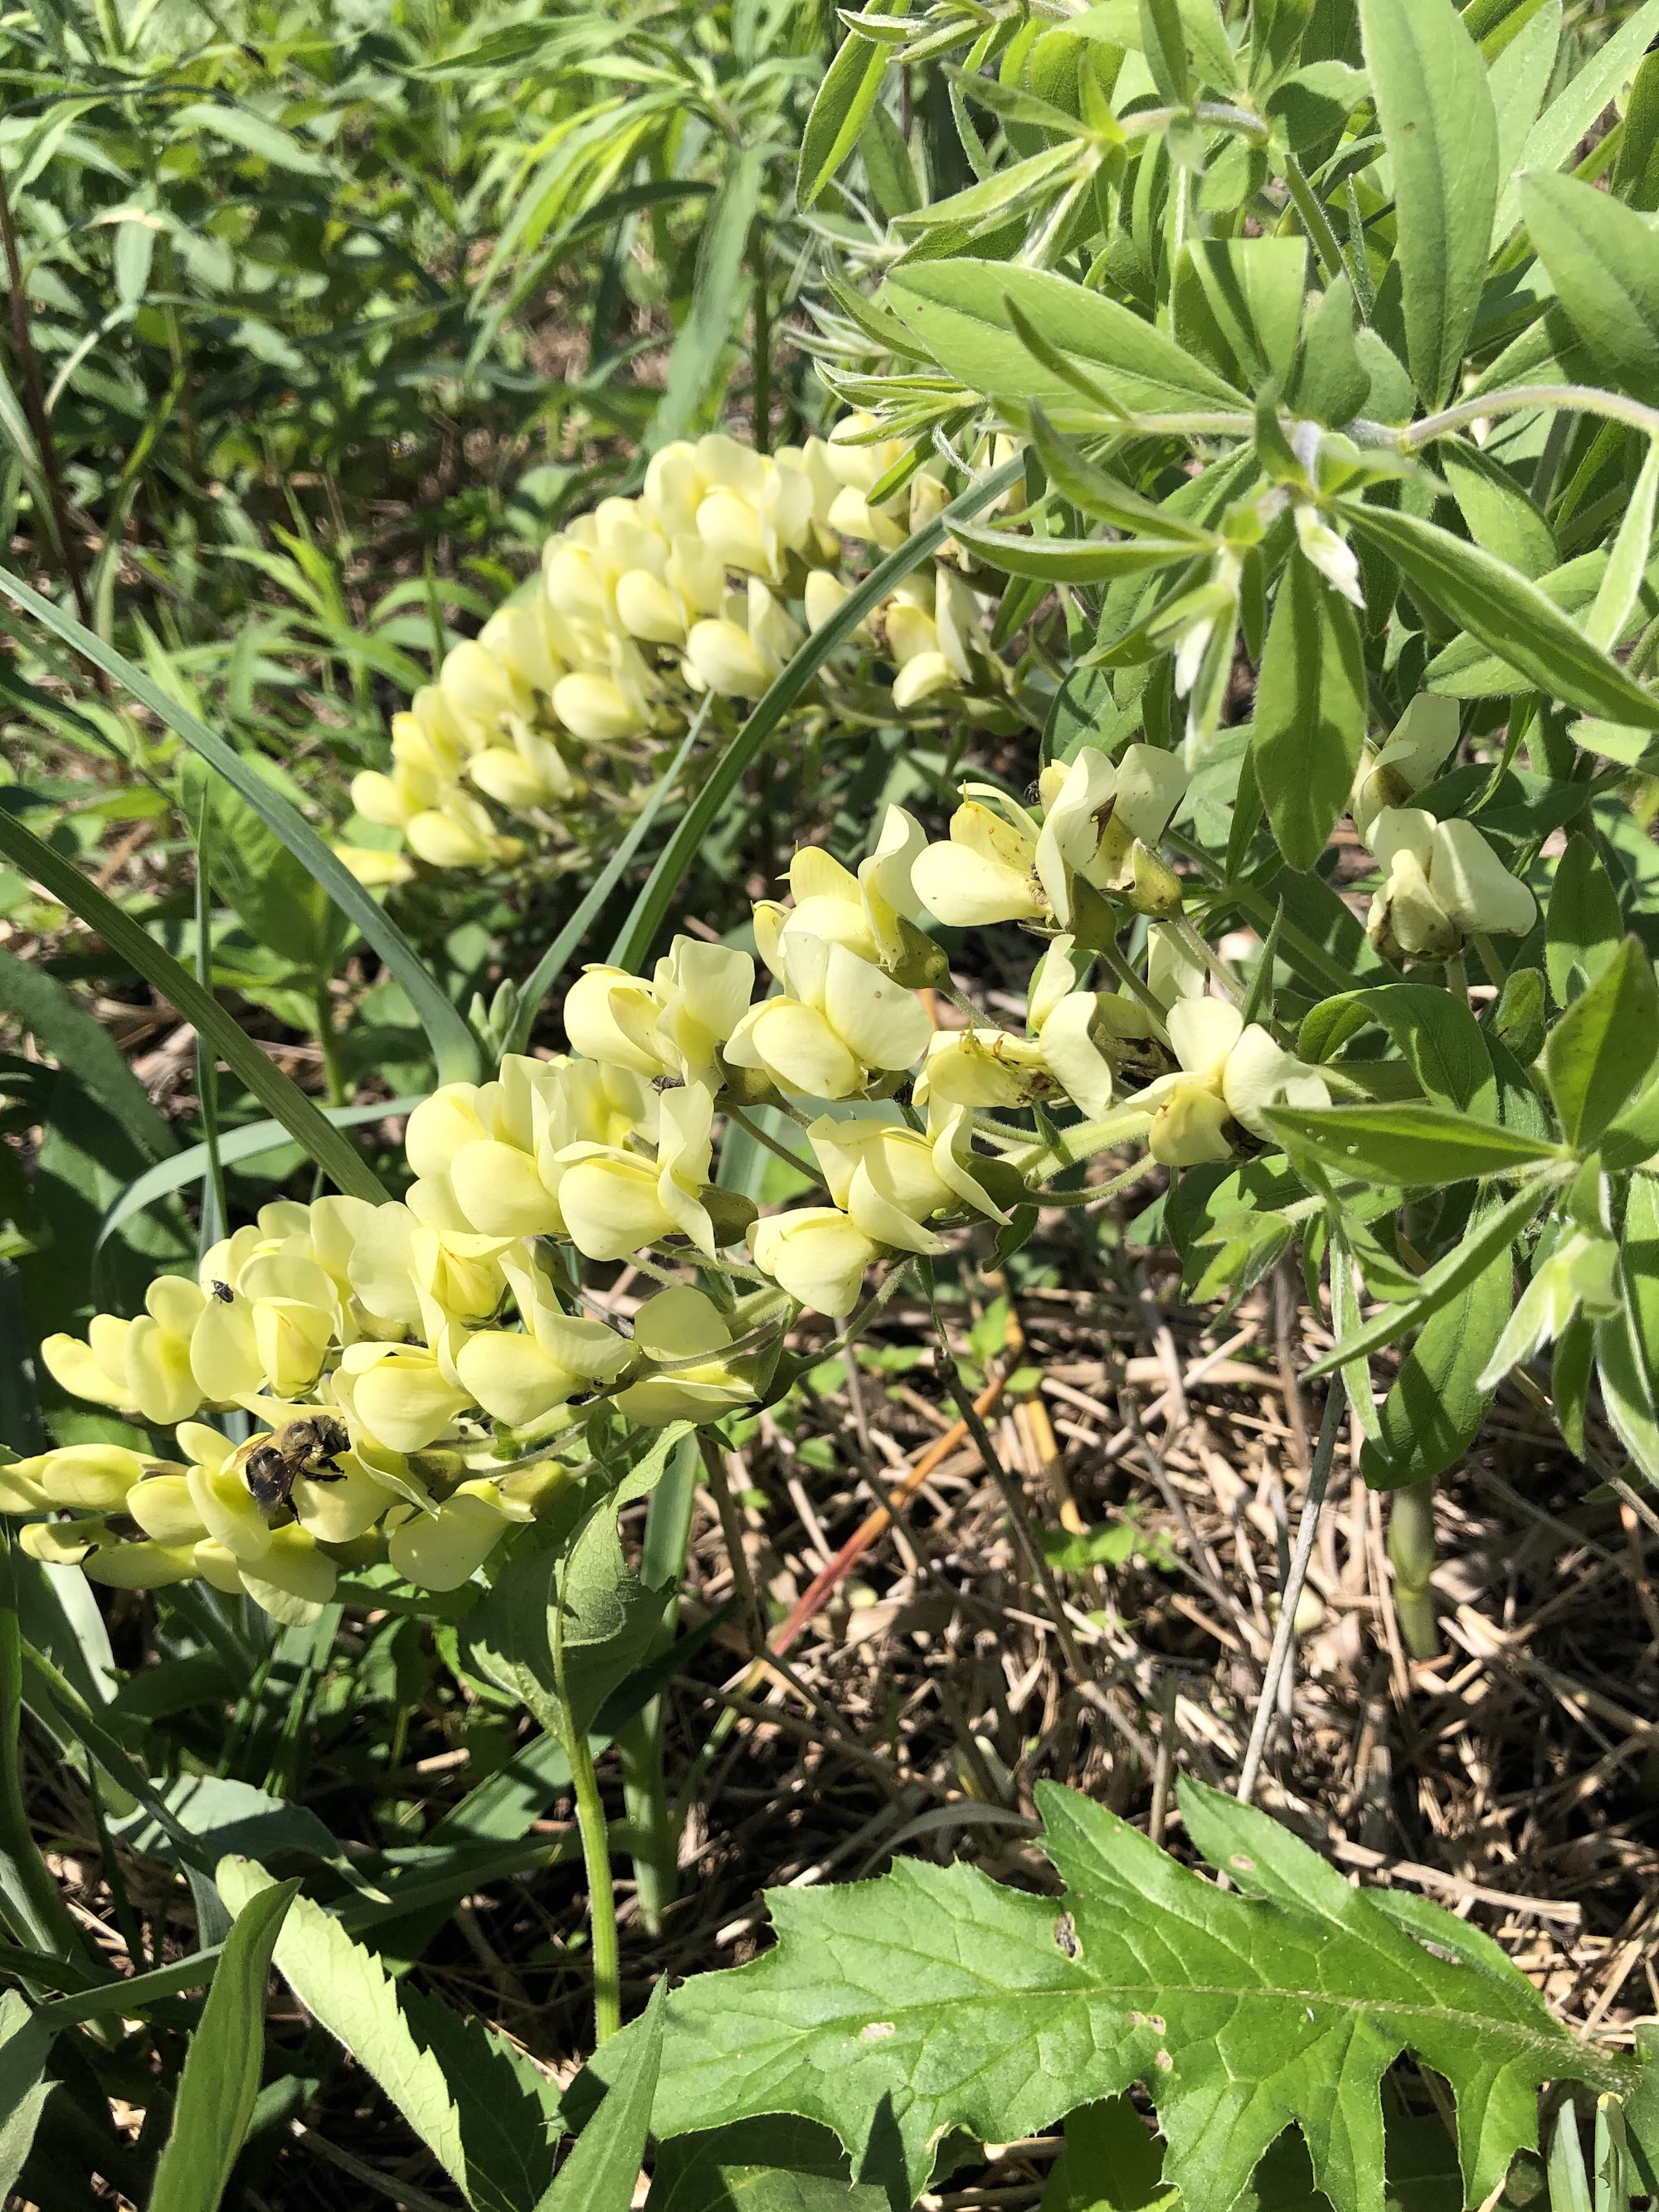 Cream Wild Indigo in UW Arboretum in Madison, Wisconsin on May 22, 2021.